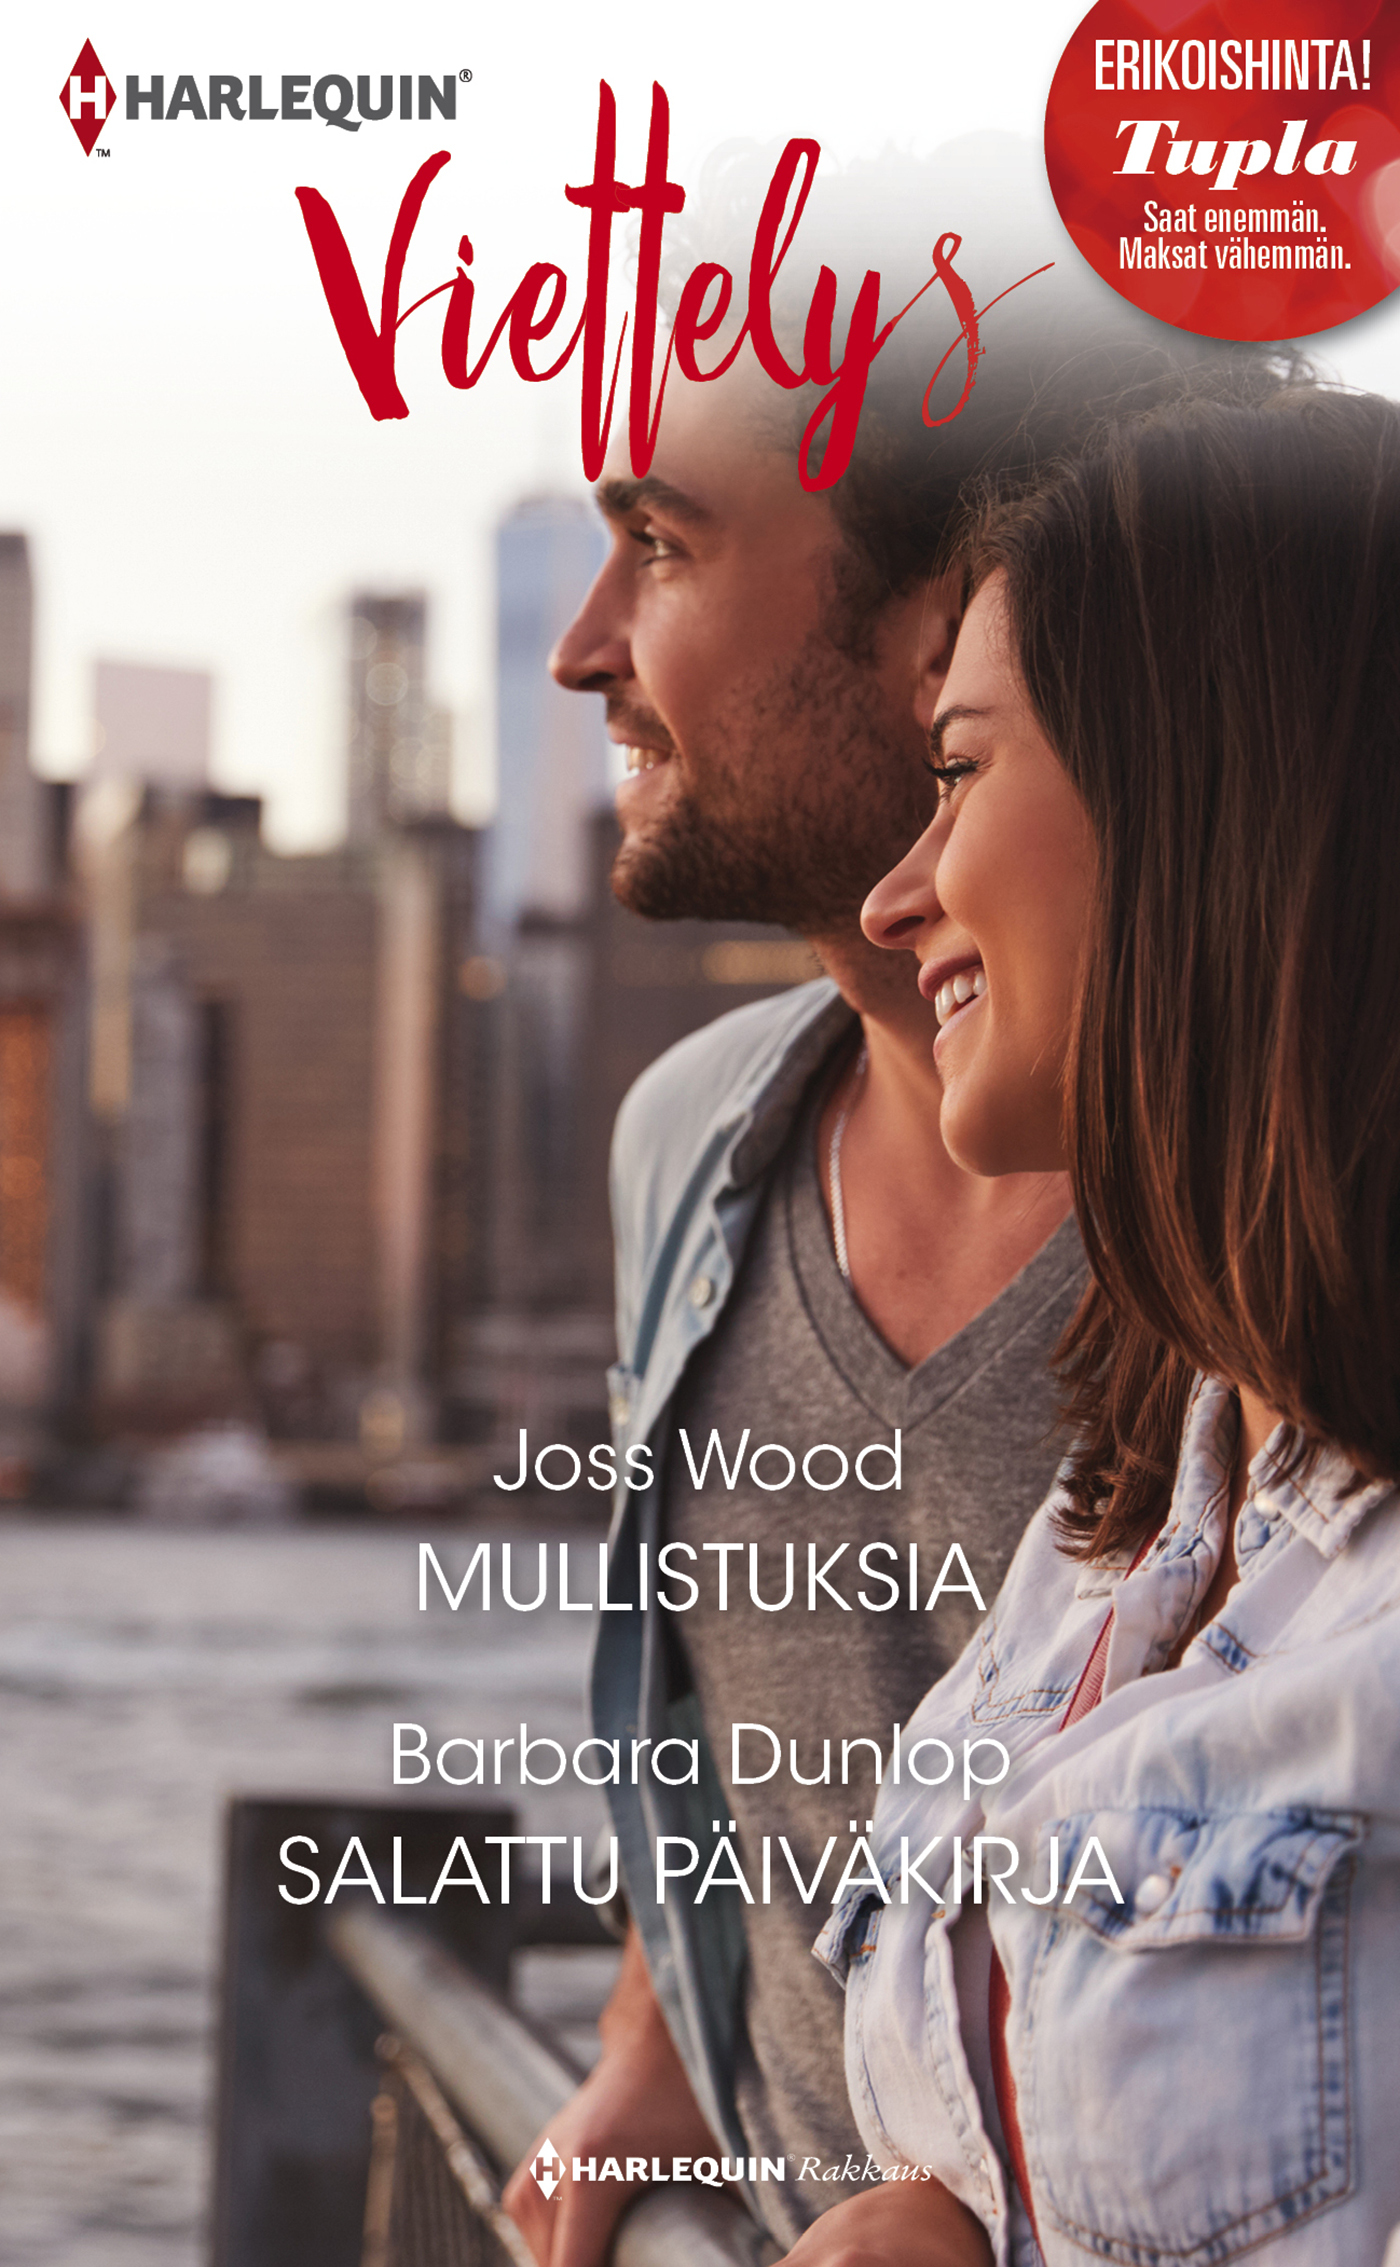 Dunlop, Barbara - Mullistuksia / Salattu päiväkirja, ebook